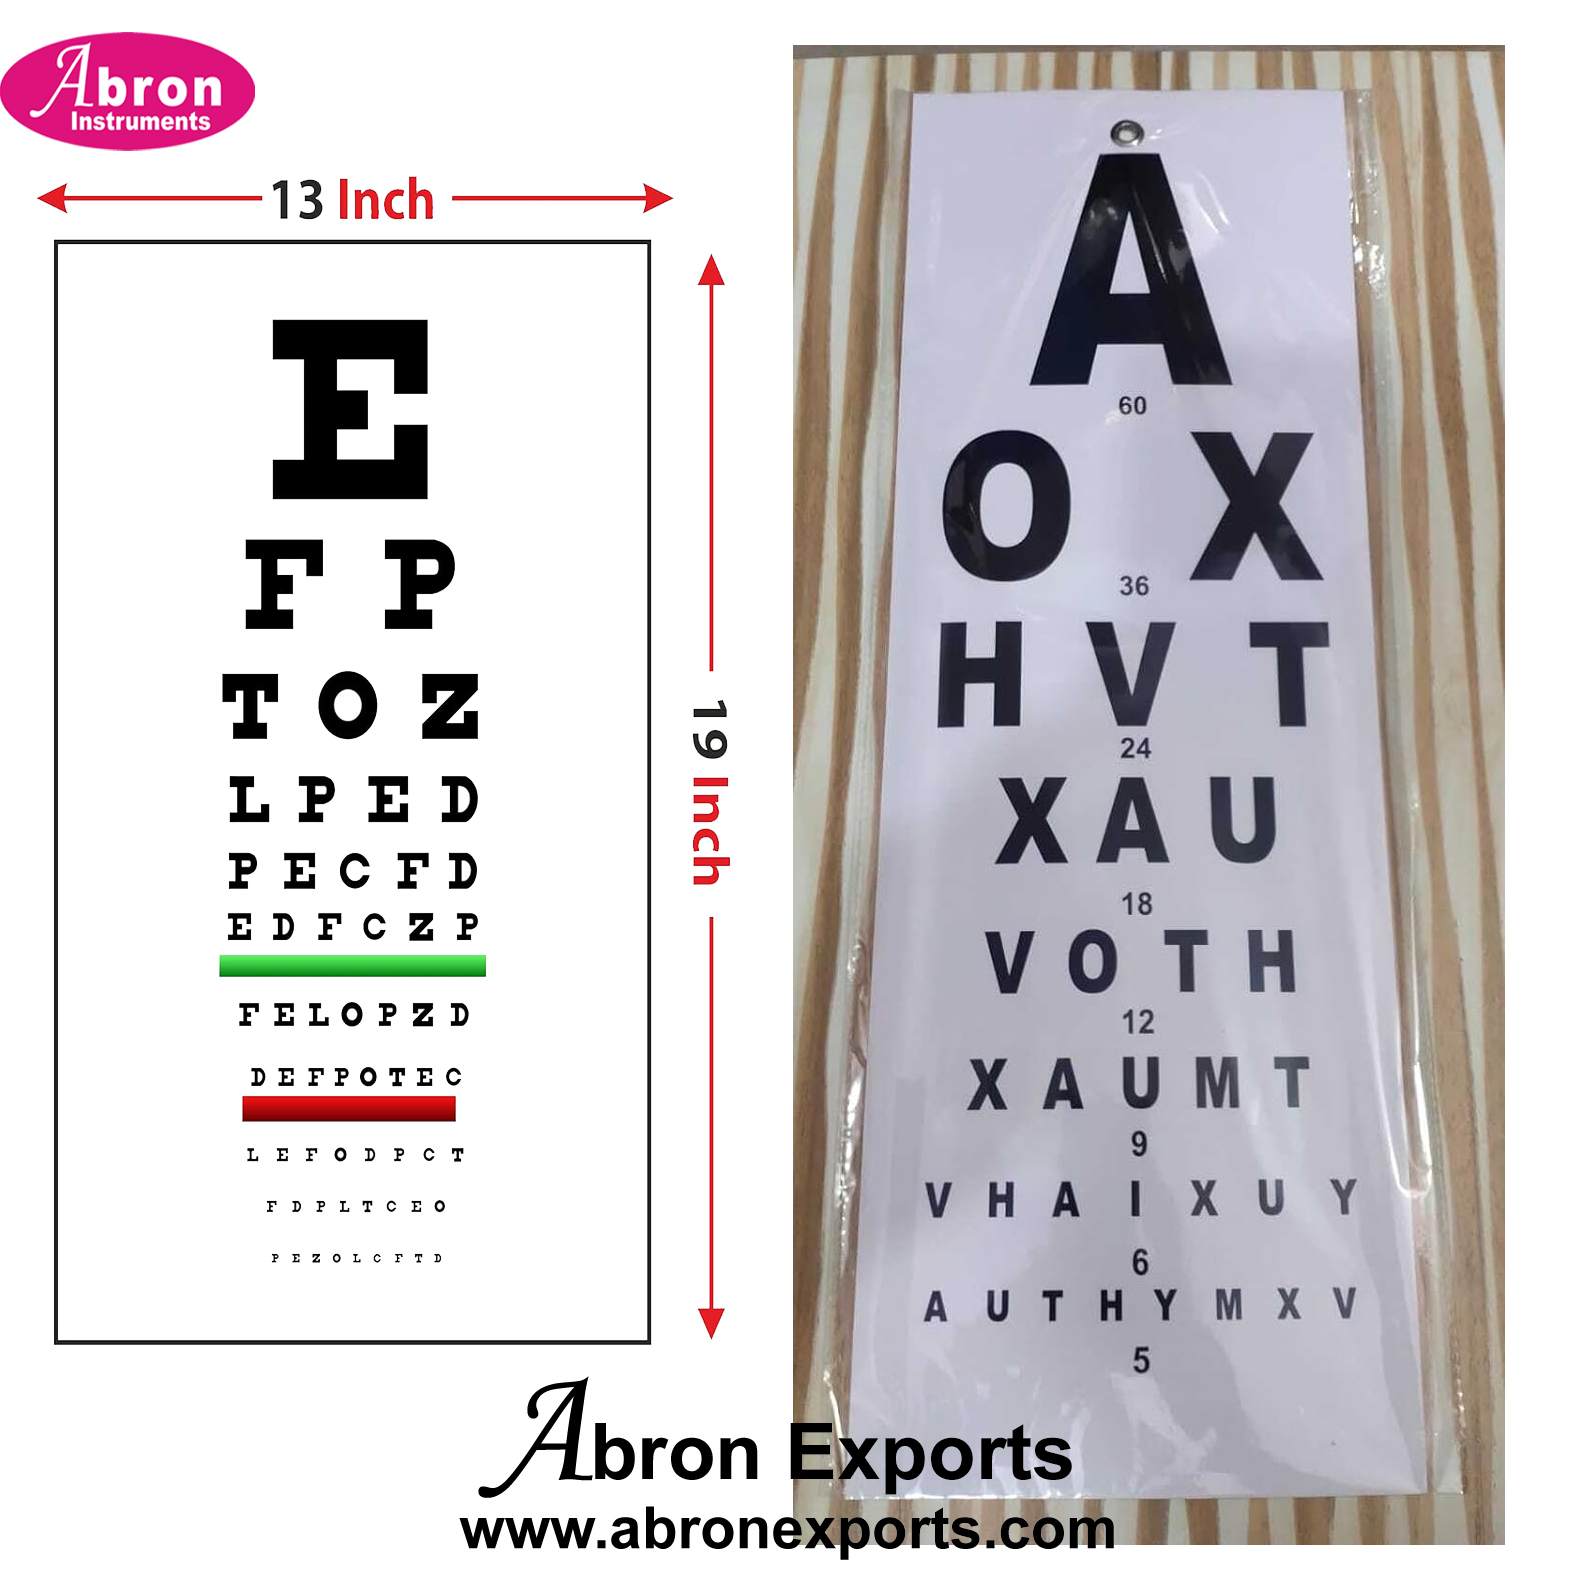 Eye Testing Snellens Chart Wall Abron10pc13,9 Inch Podster Chart Abron ABM-2500